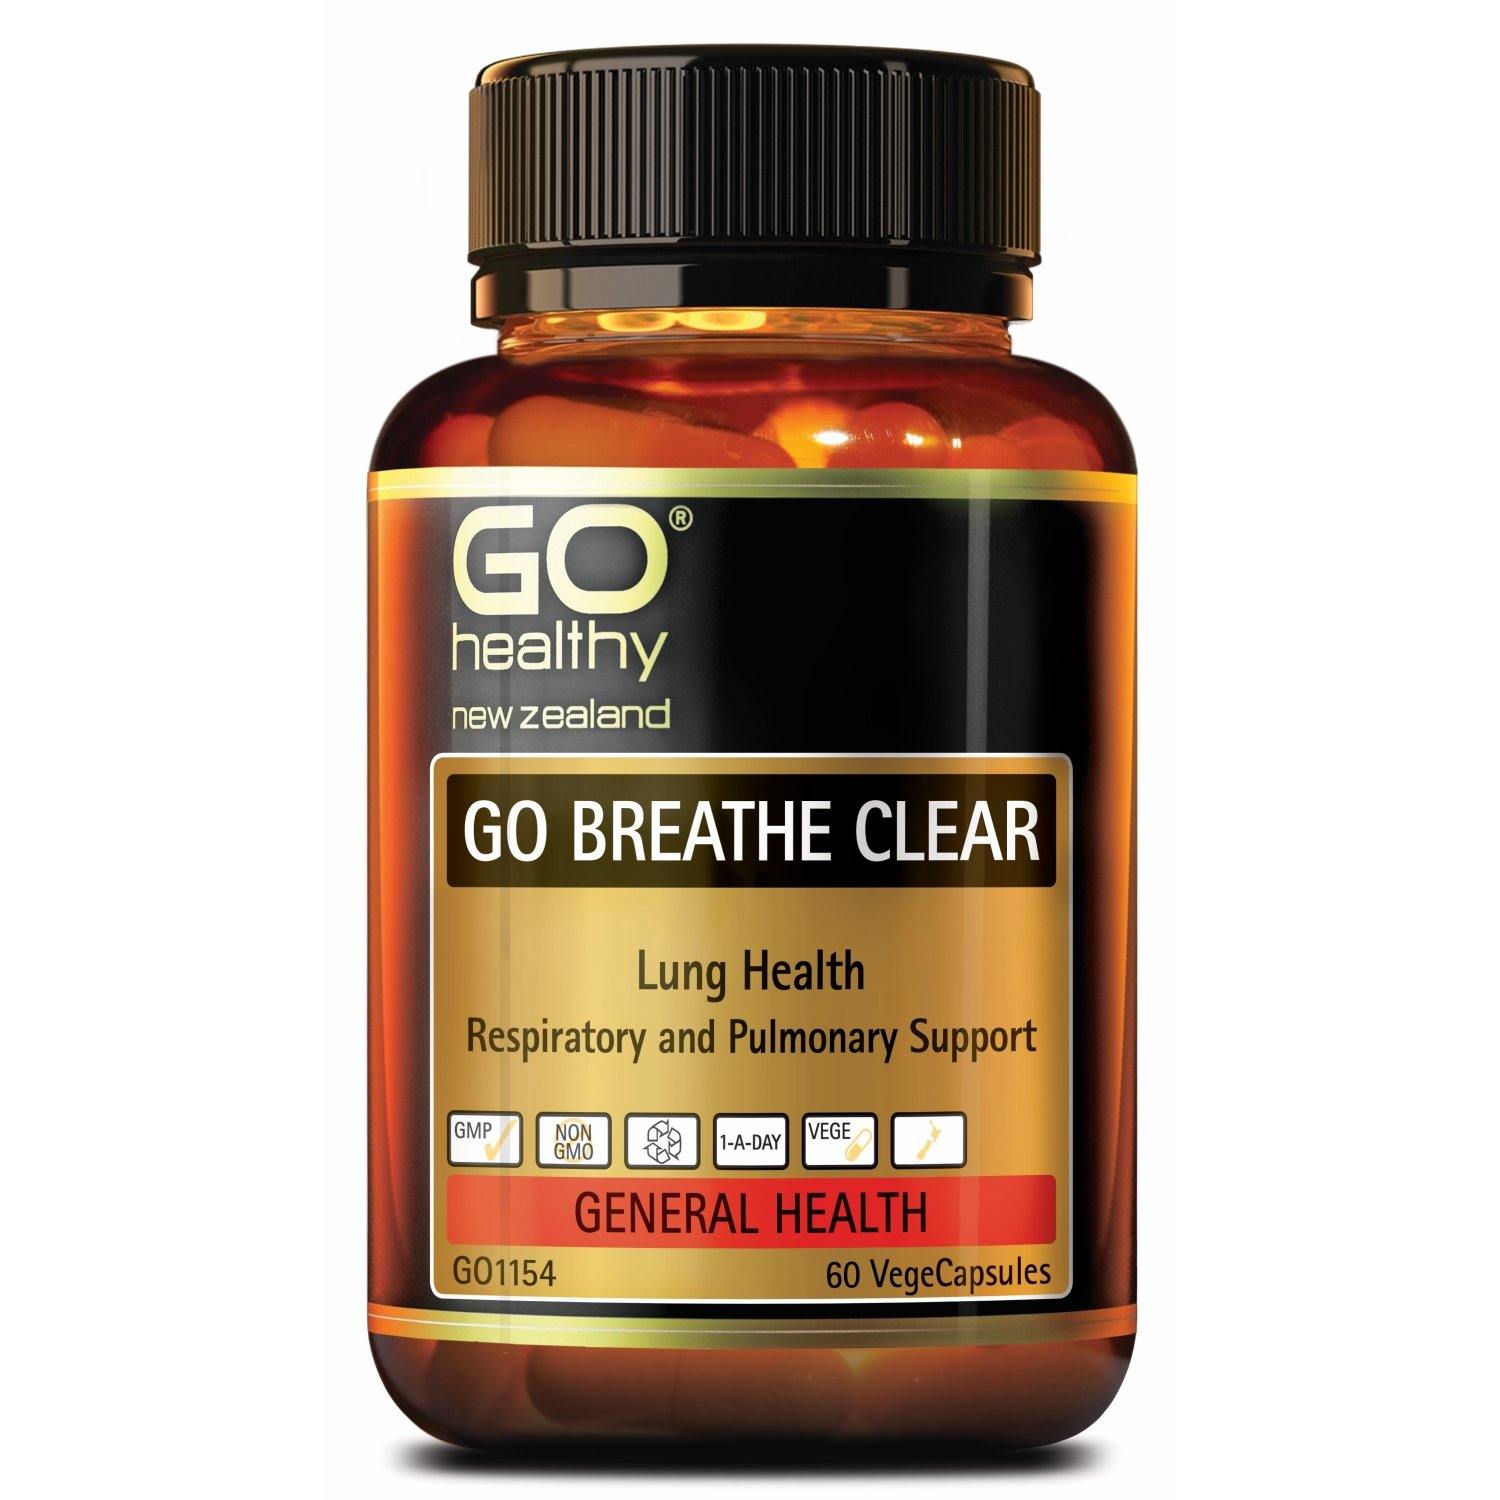 Buy 3 Get 1 Free - Go Healthy Breathe Clear 60 vege capsules - Function: Breathe Care, Function: Lung Health, nz made, Price  $50-$150, Specials, Vendor  Go Healthy - Aotea Wellness